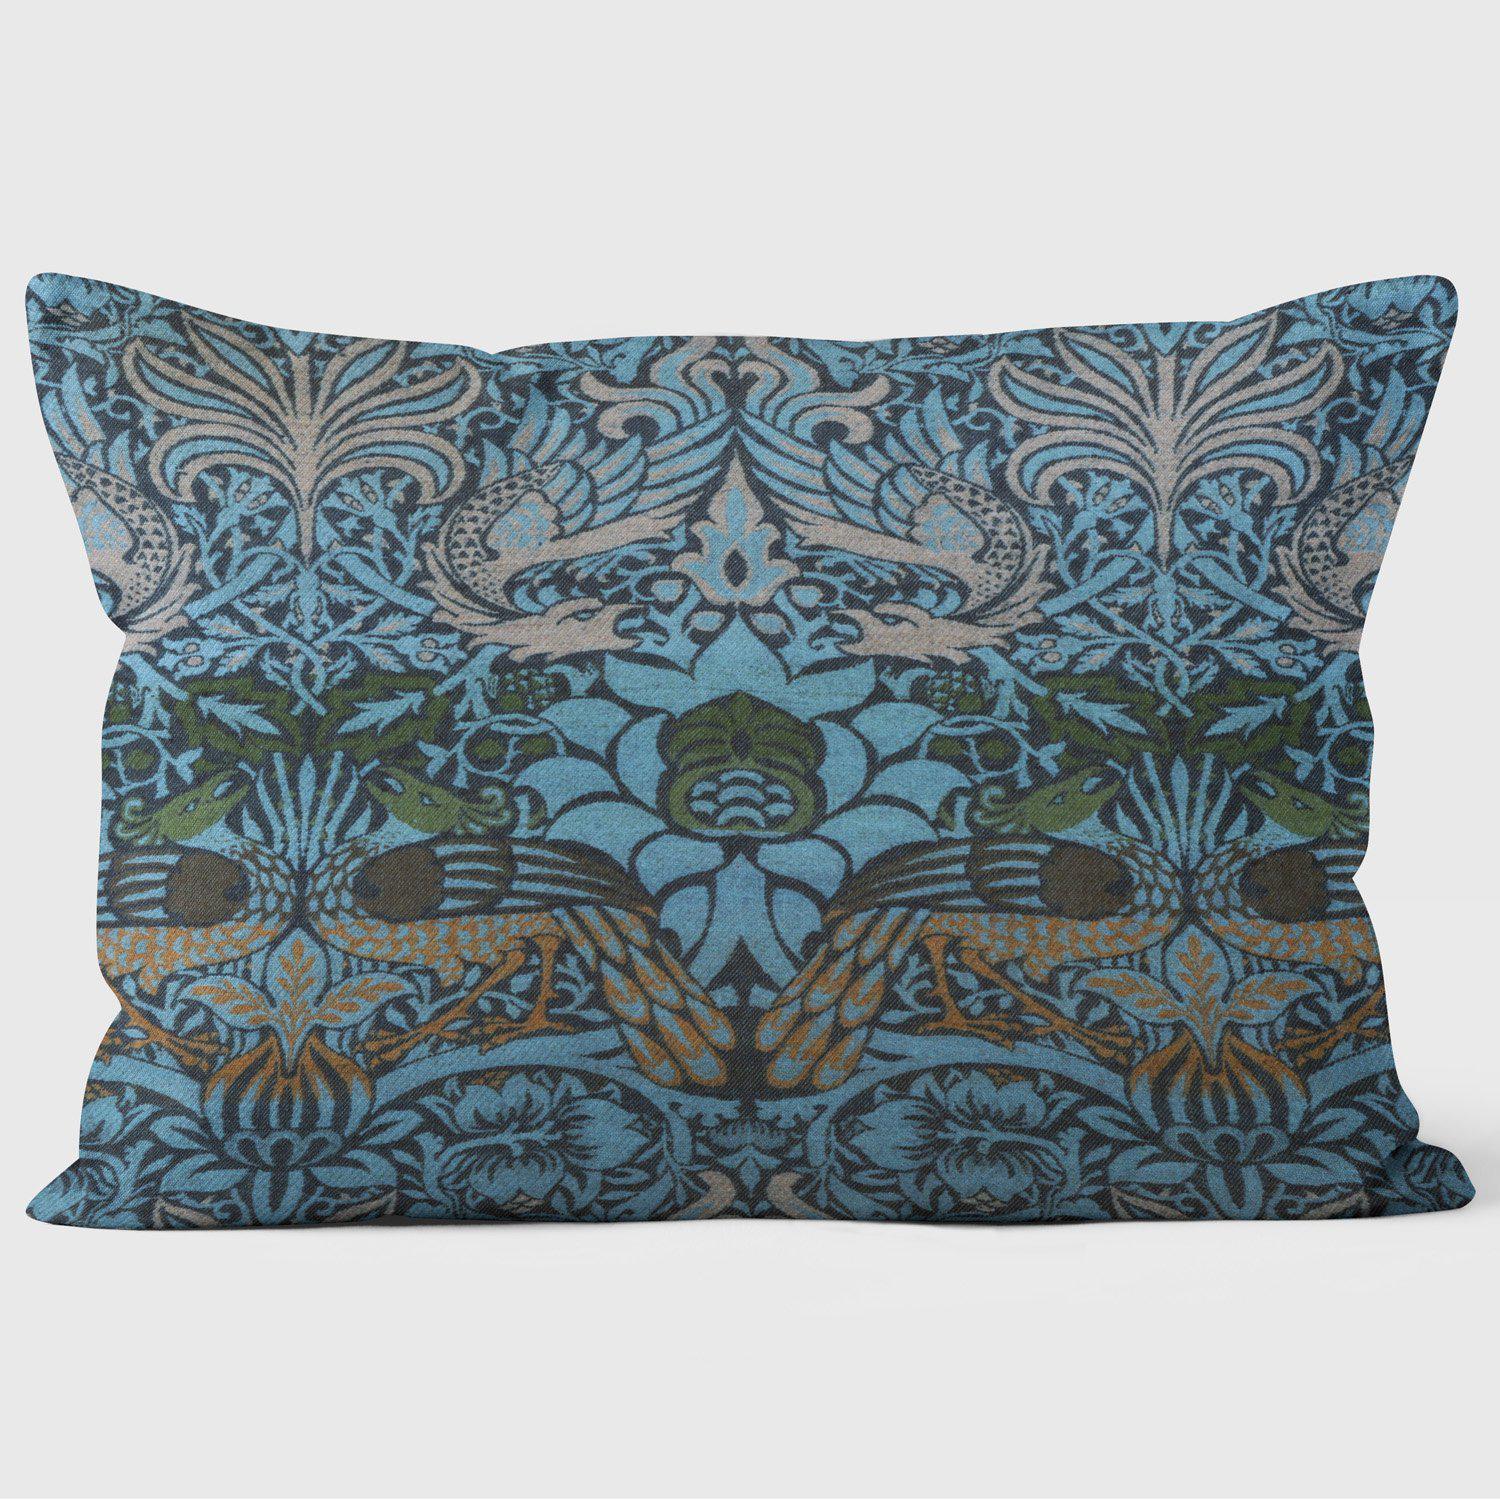 Peacock and Dragon - William Morris Cushion - Handmade Cushions UK - WeLoveCushions